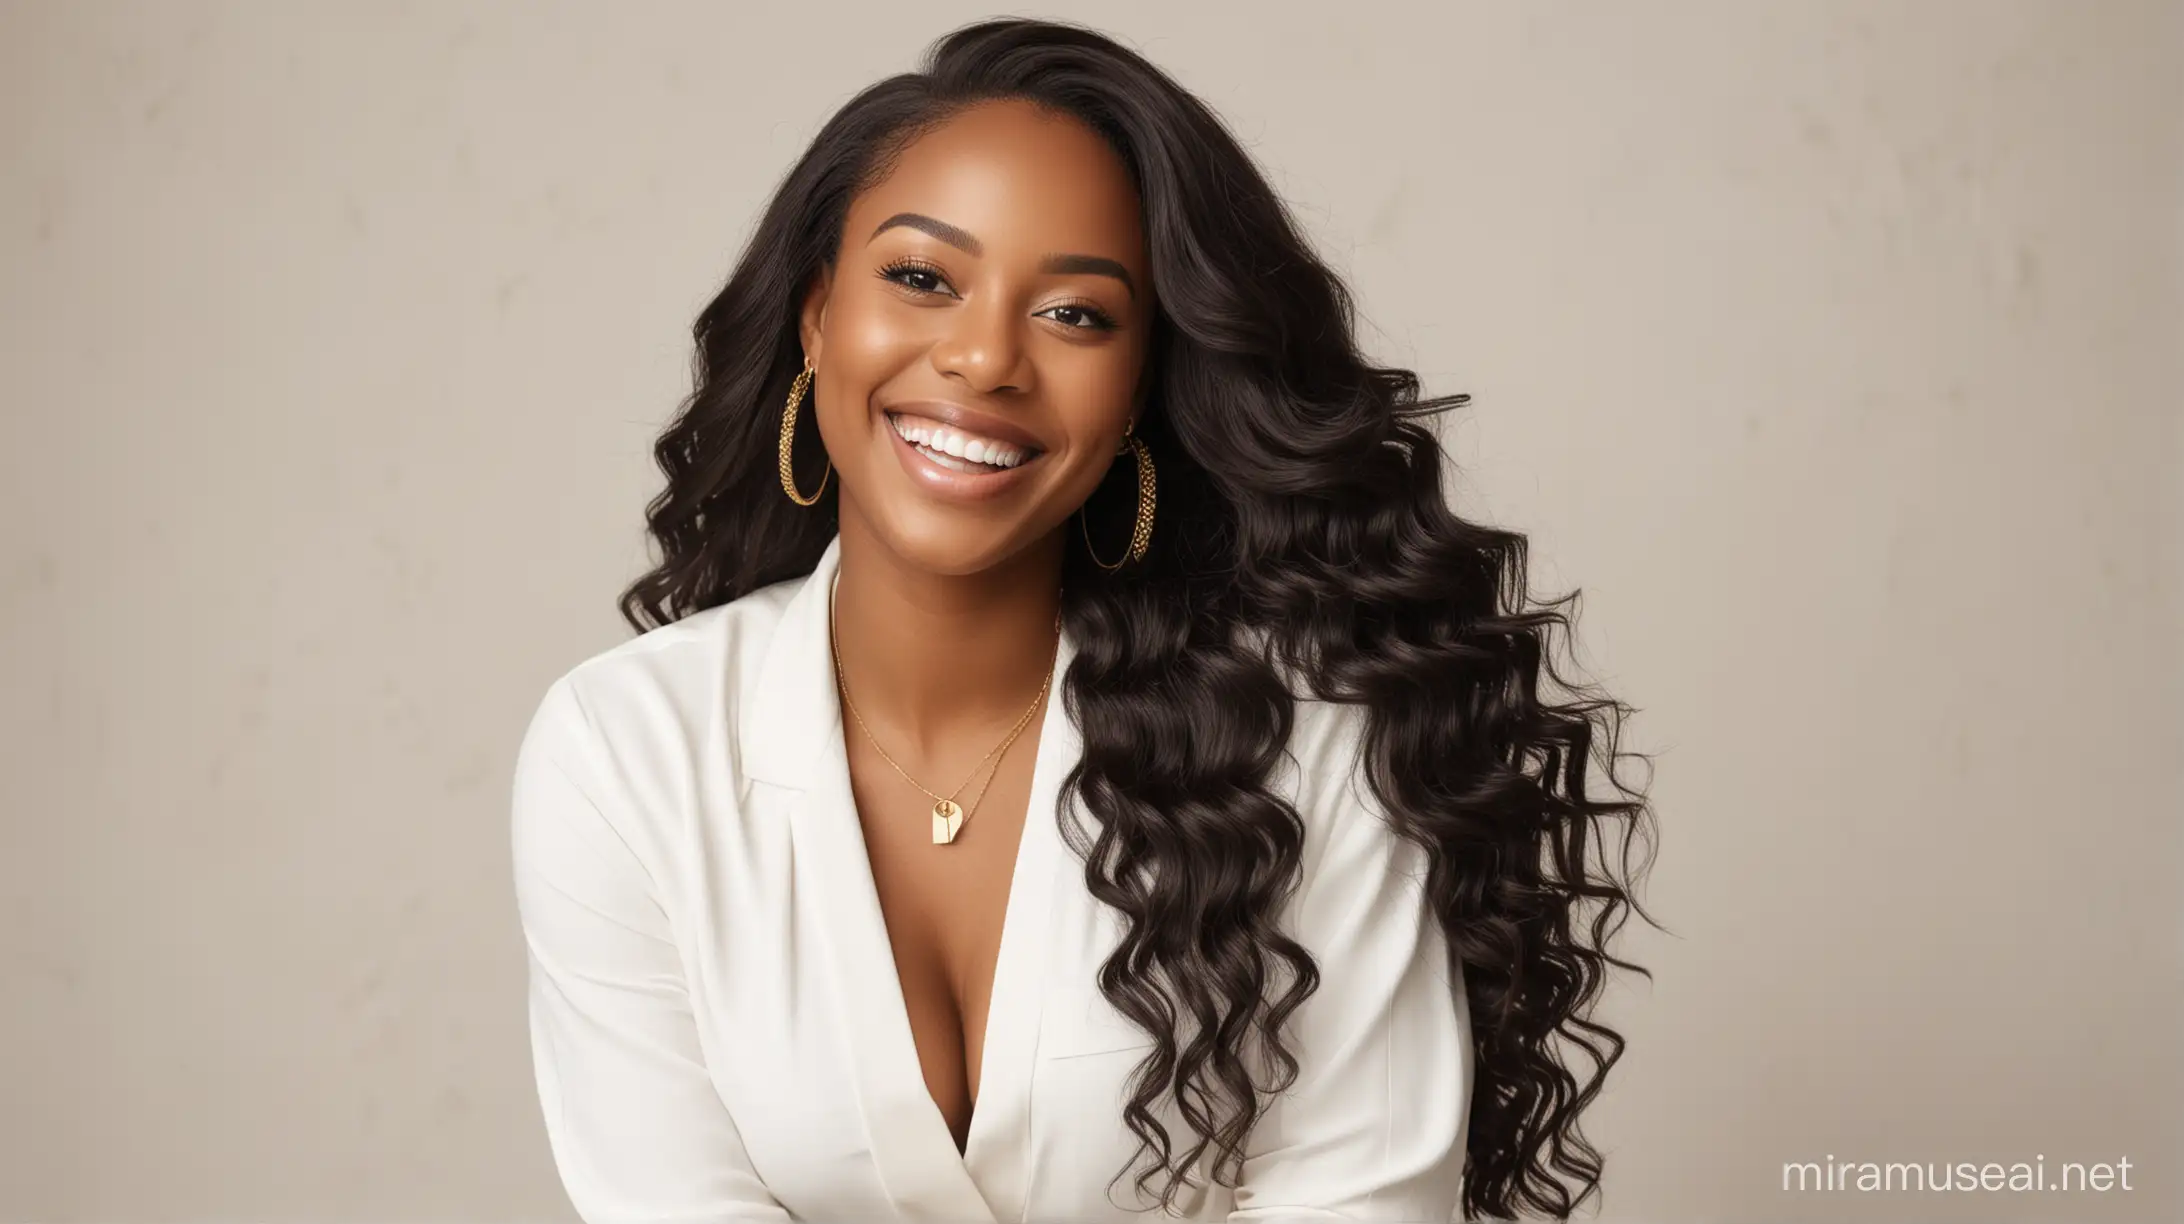 Stylish Black Woman Entrepreneur Photoshoot in Chic Neutral Setting